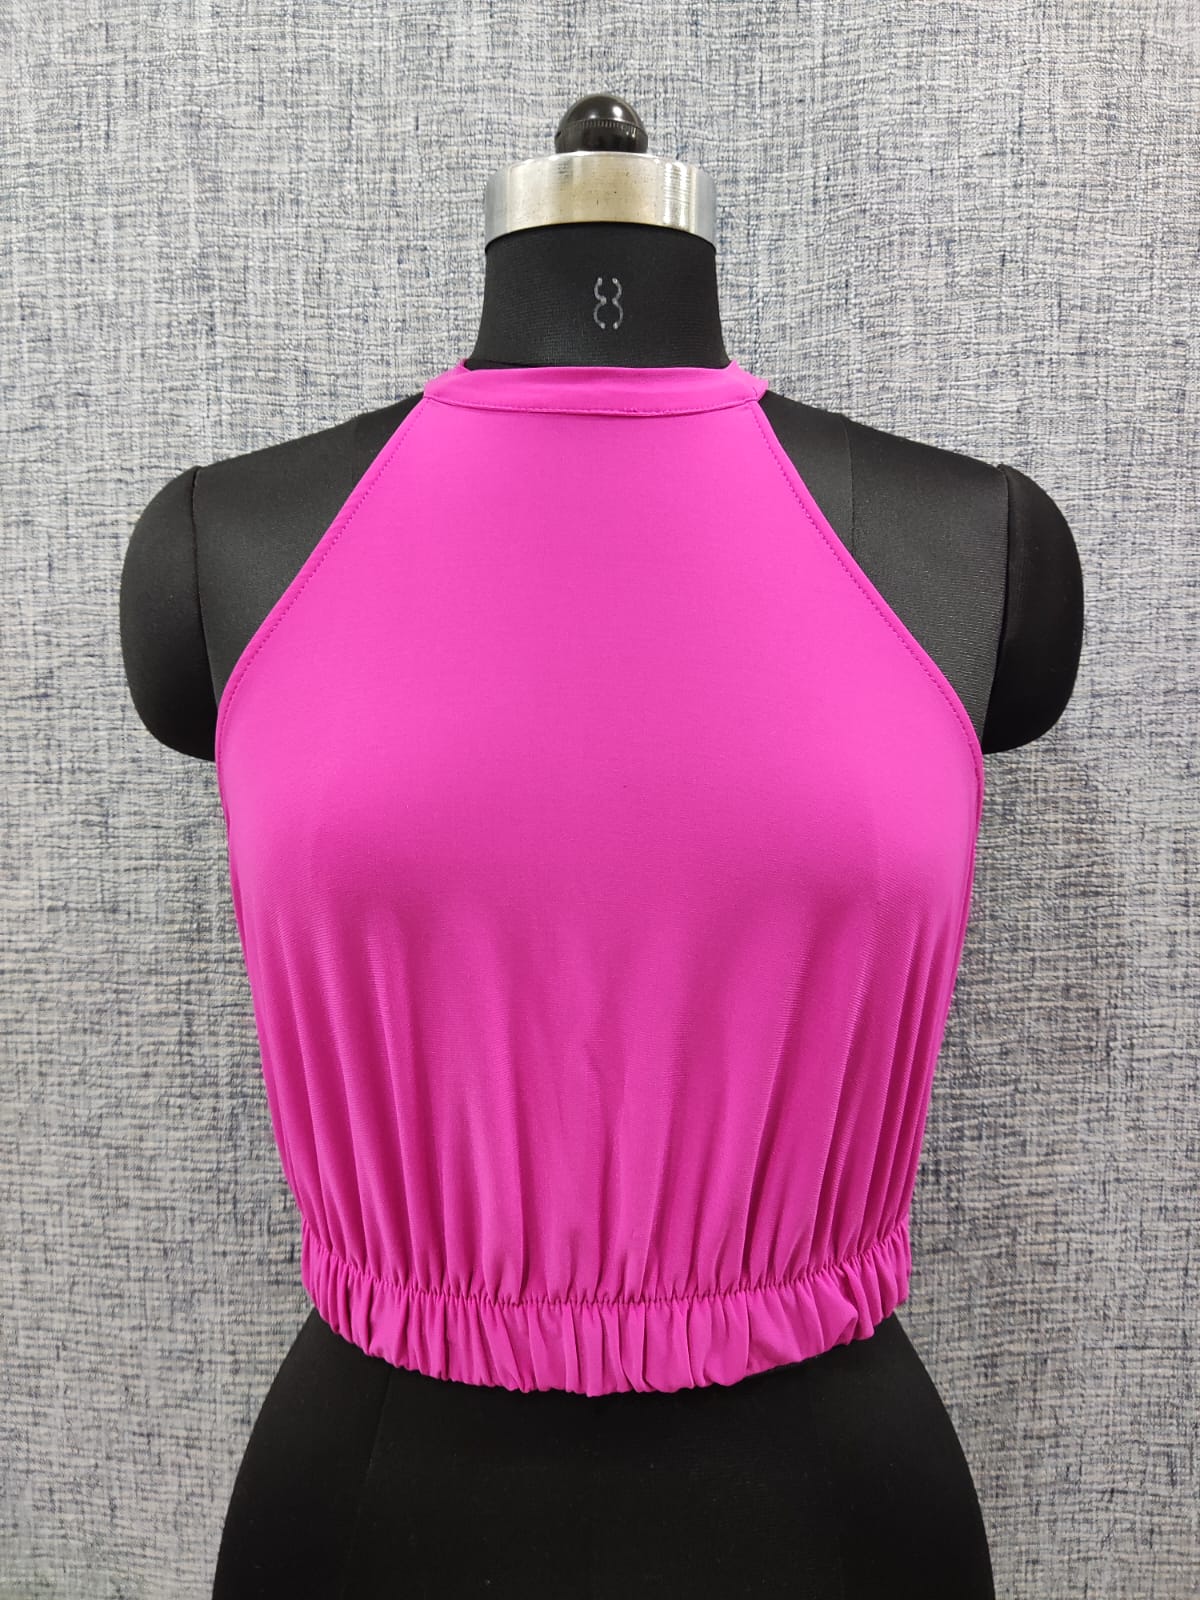 ZARA Hot Pink Halter Neck Sleeveless Crop Top | Relove